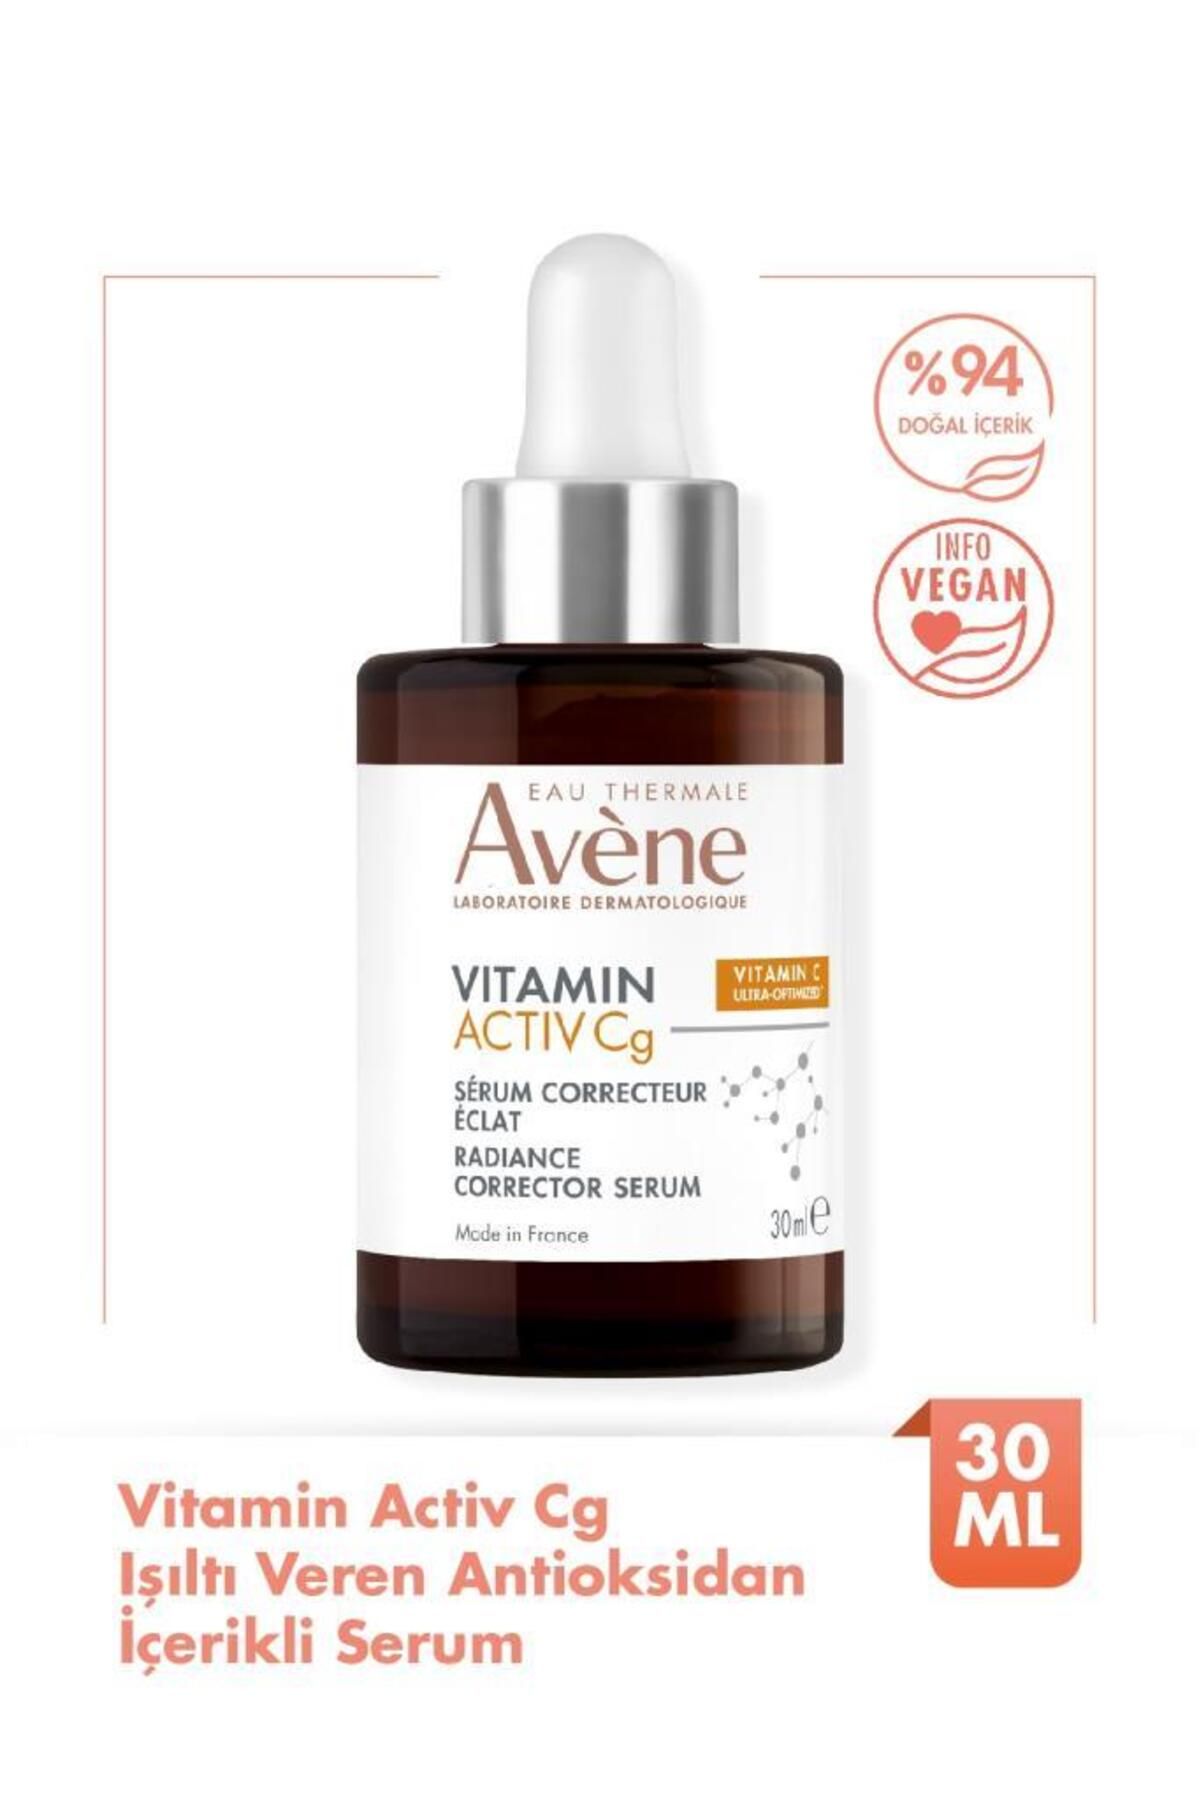 Avene Vitamin Activ Cg Radiance Correcteur Serum 30 ml